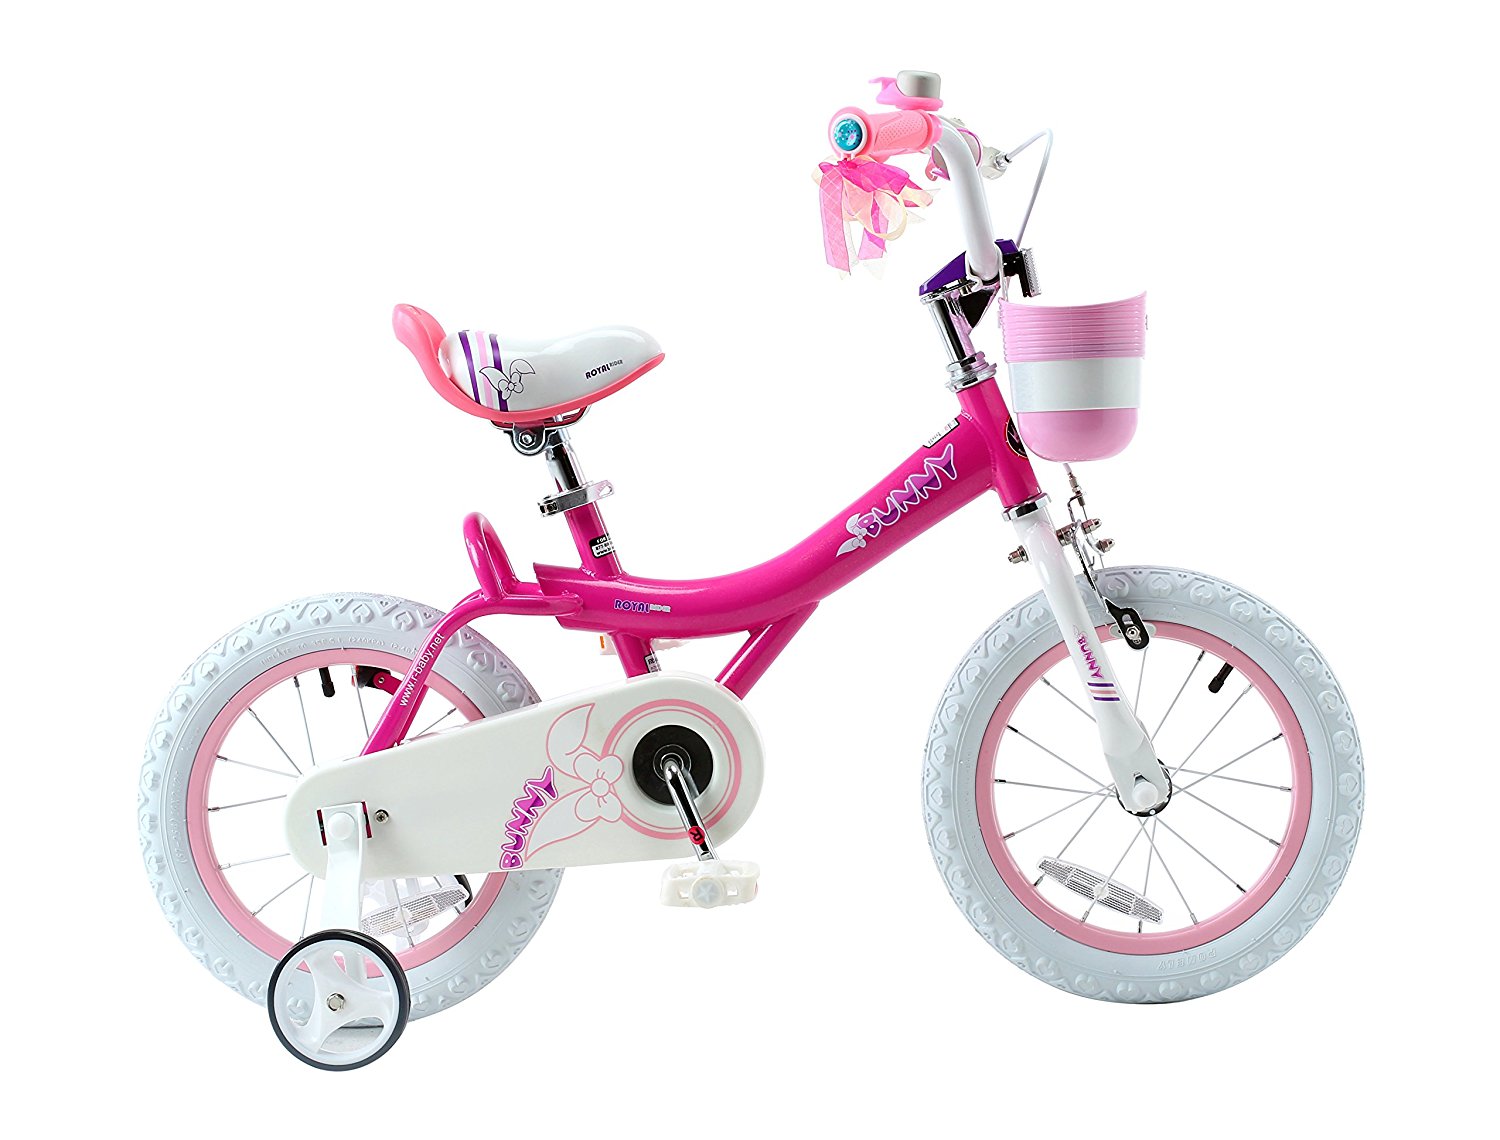 RoyalBaby Jenny & Bunny Girl's Bike with basket